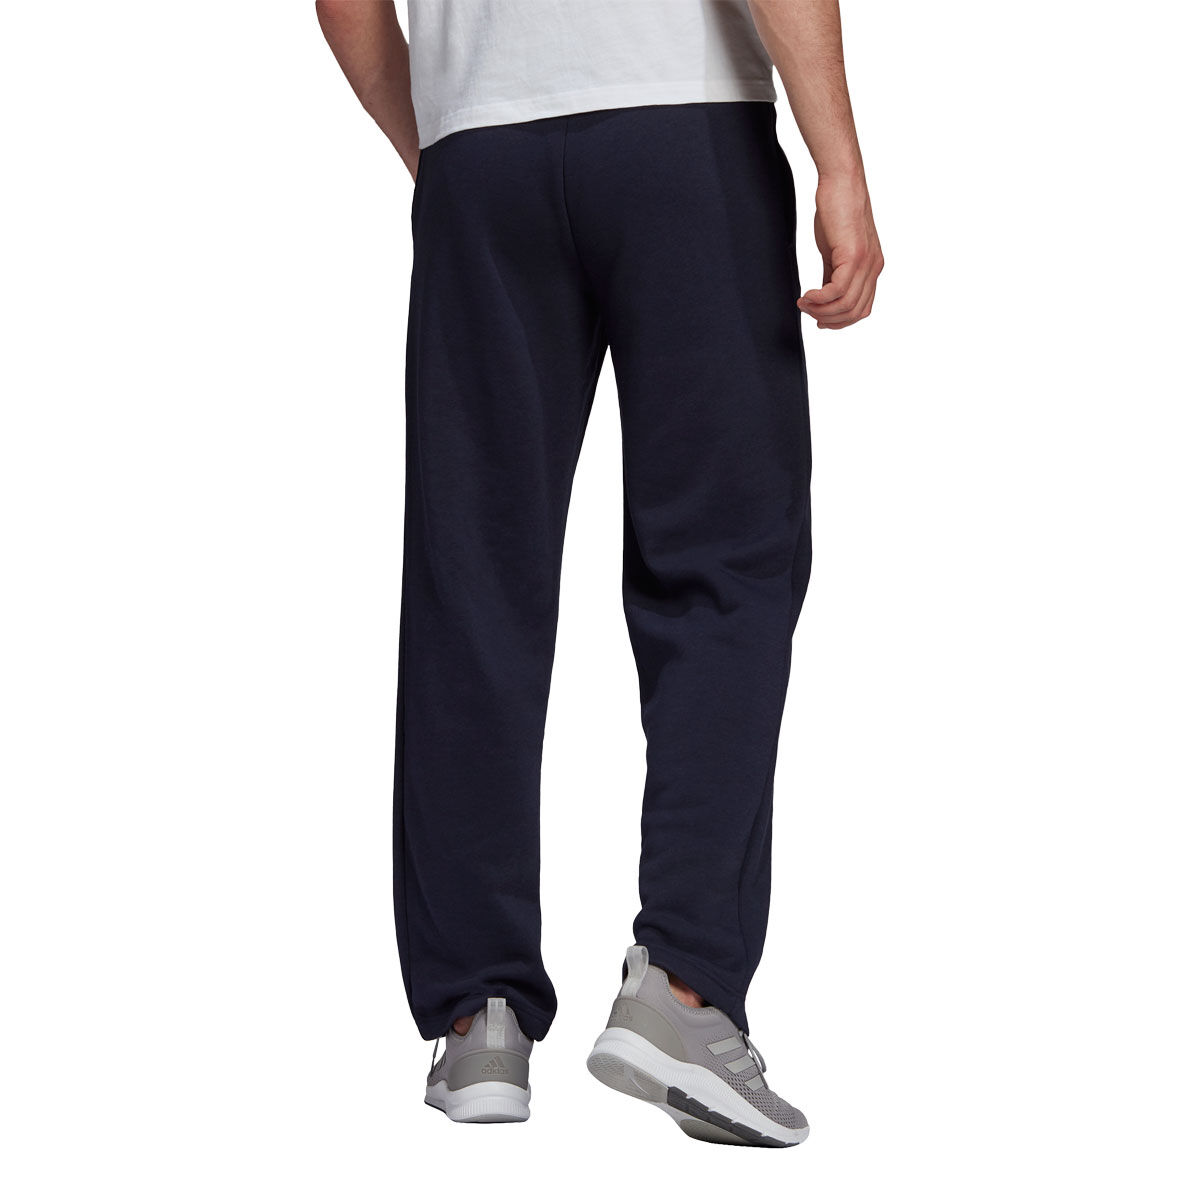 Adidas Mens Sports ID Tiro Woven Pants - S / M / L / XL / XXL - White -  [EH4114] | eBay